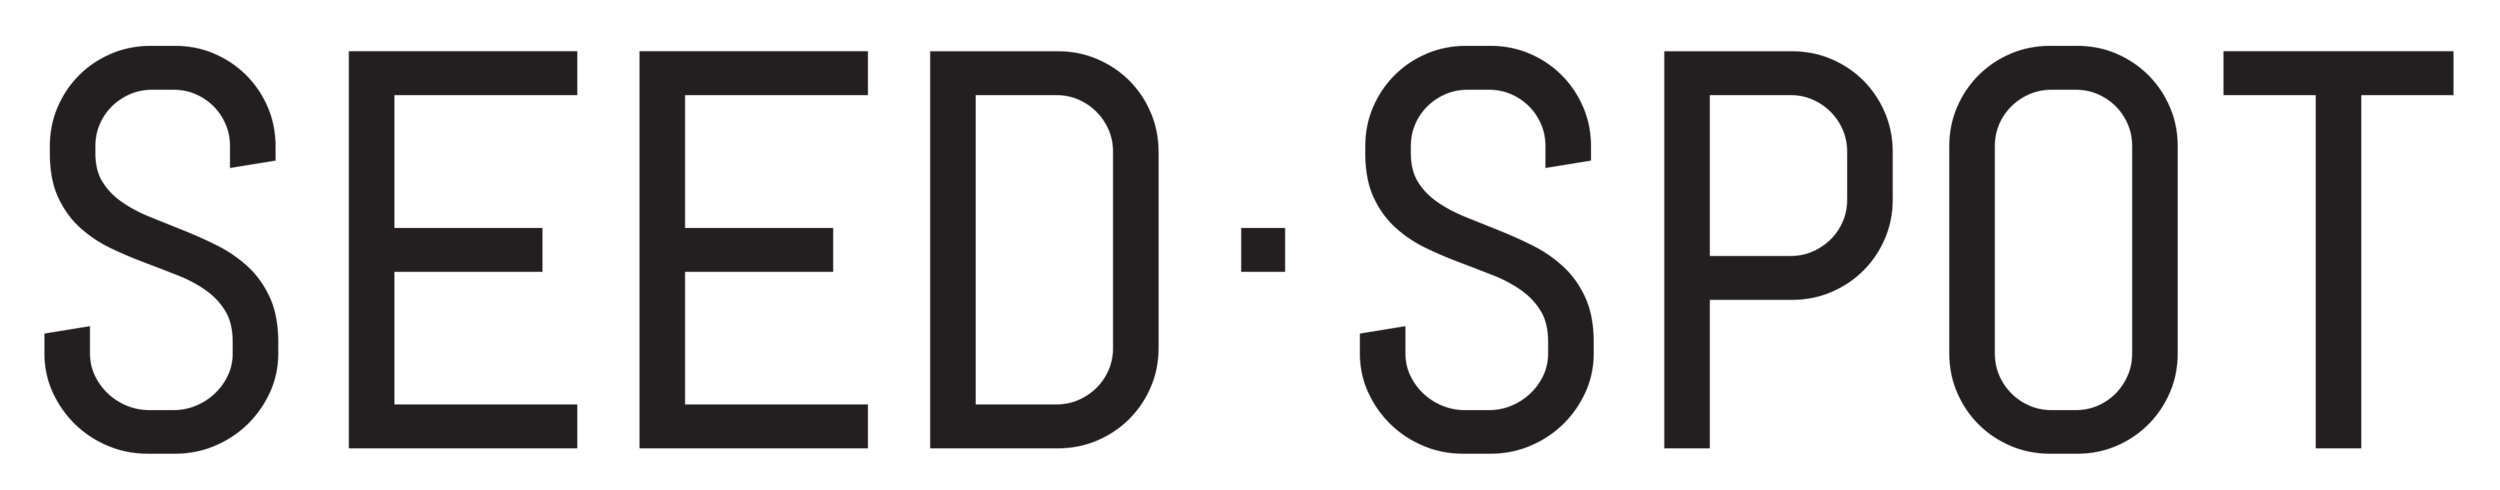 SEEDSPOT_logo.png